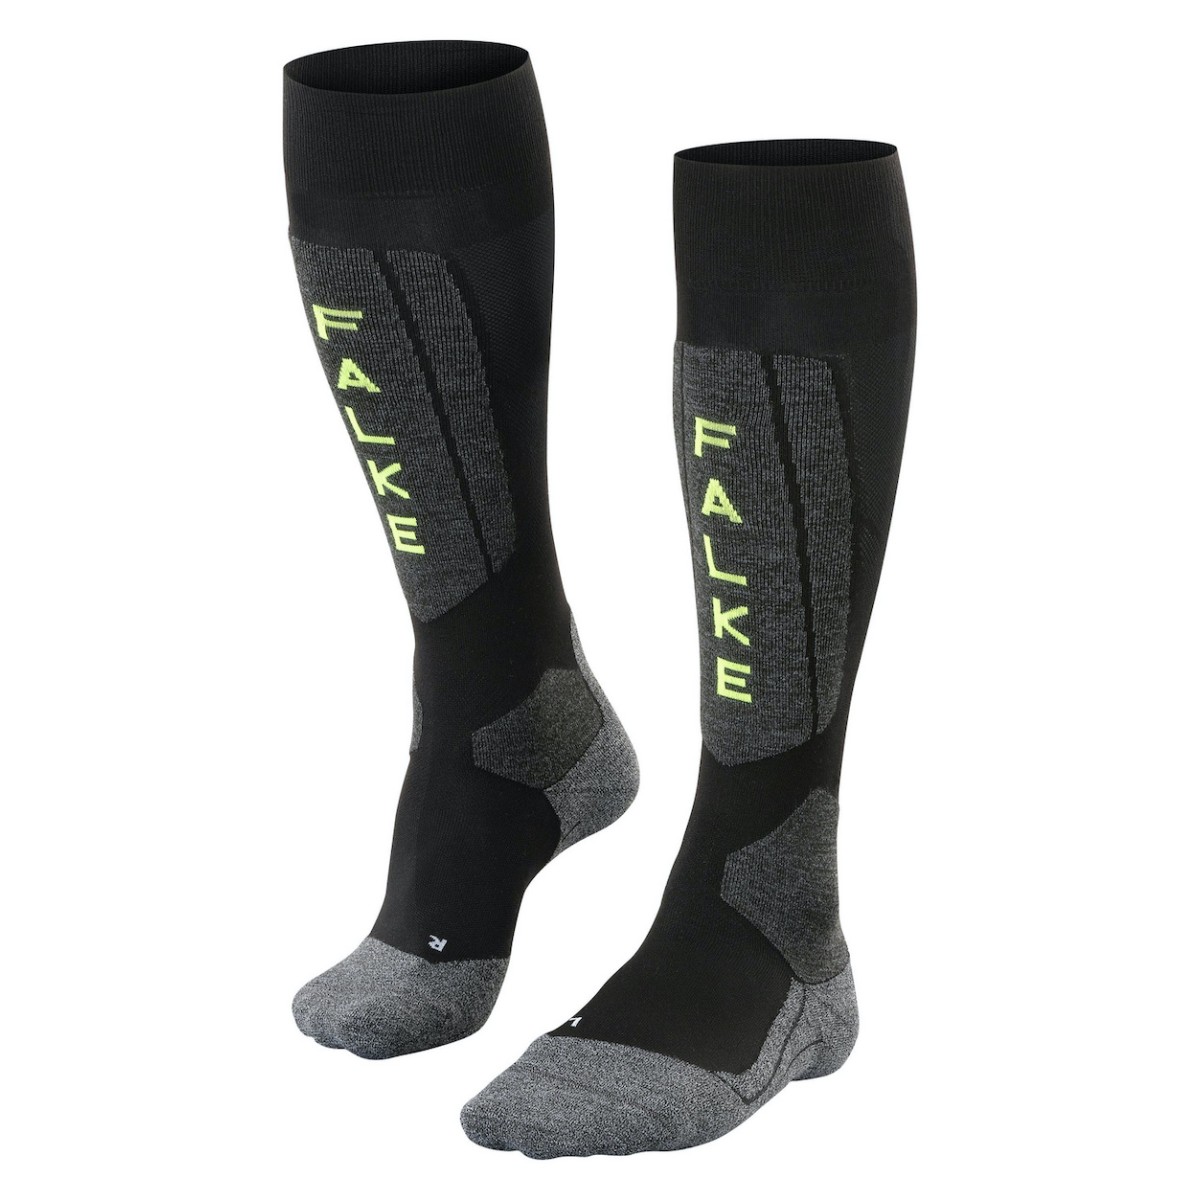 FALKE SK5 SILK socks - black/grey/green